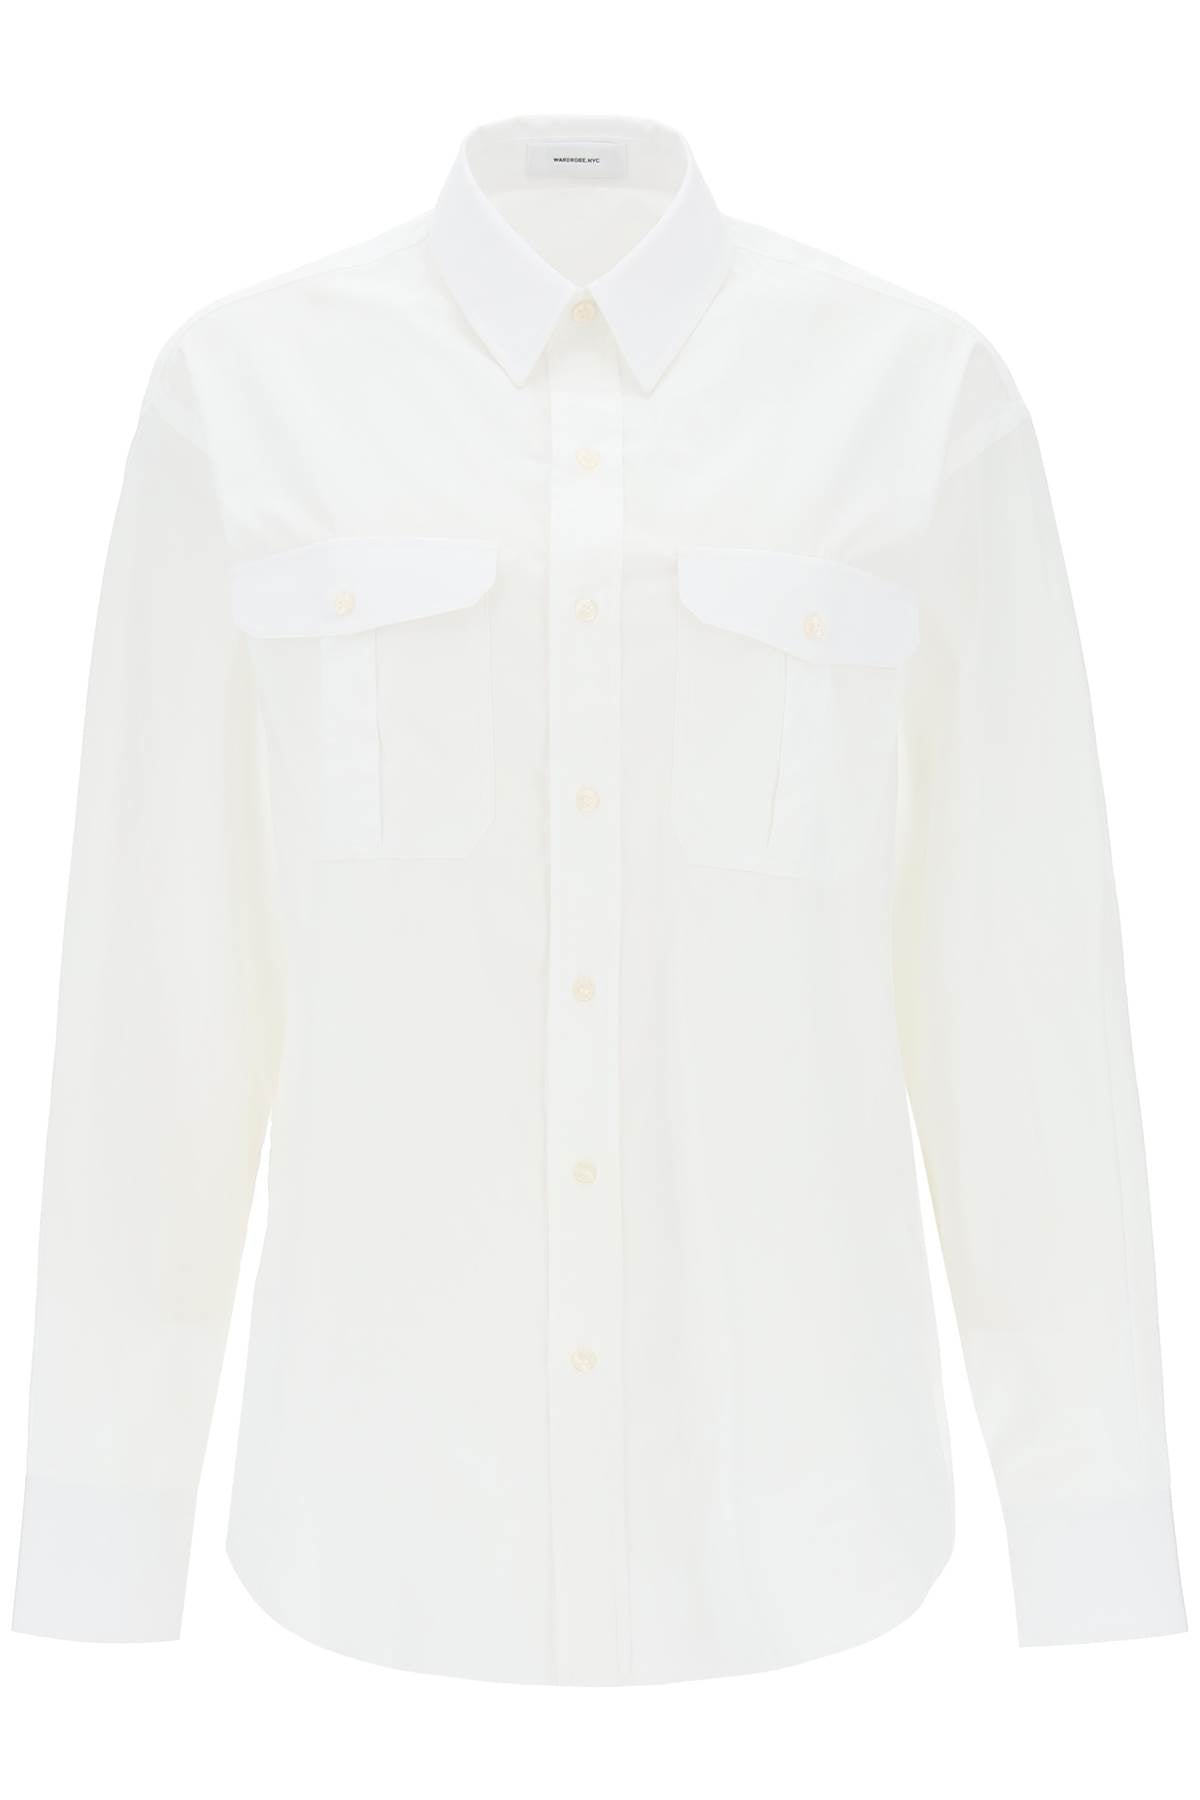 Wardrobe.nyc maxi shirt in cotton batista-0